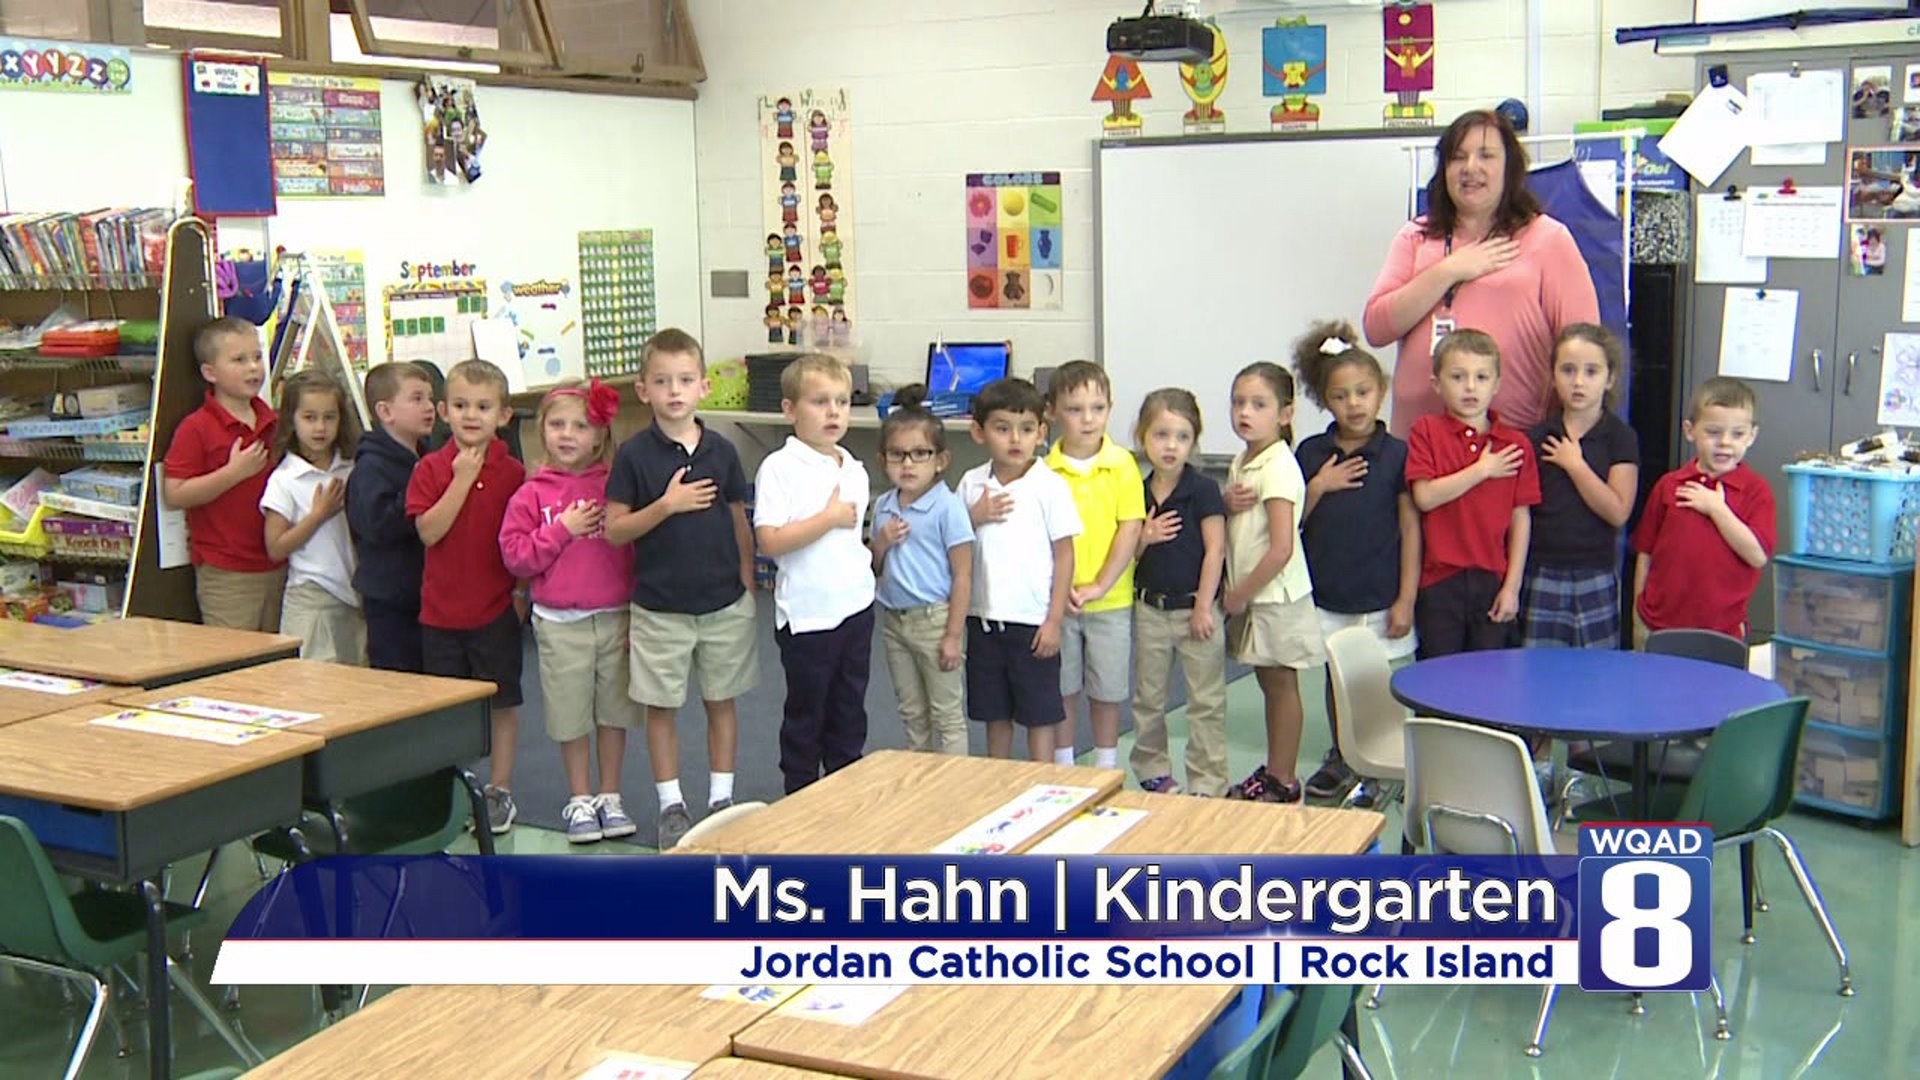 Ms Hahn Kindergarten - Jordan Catholic School